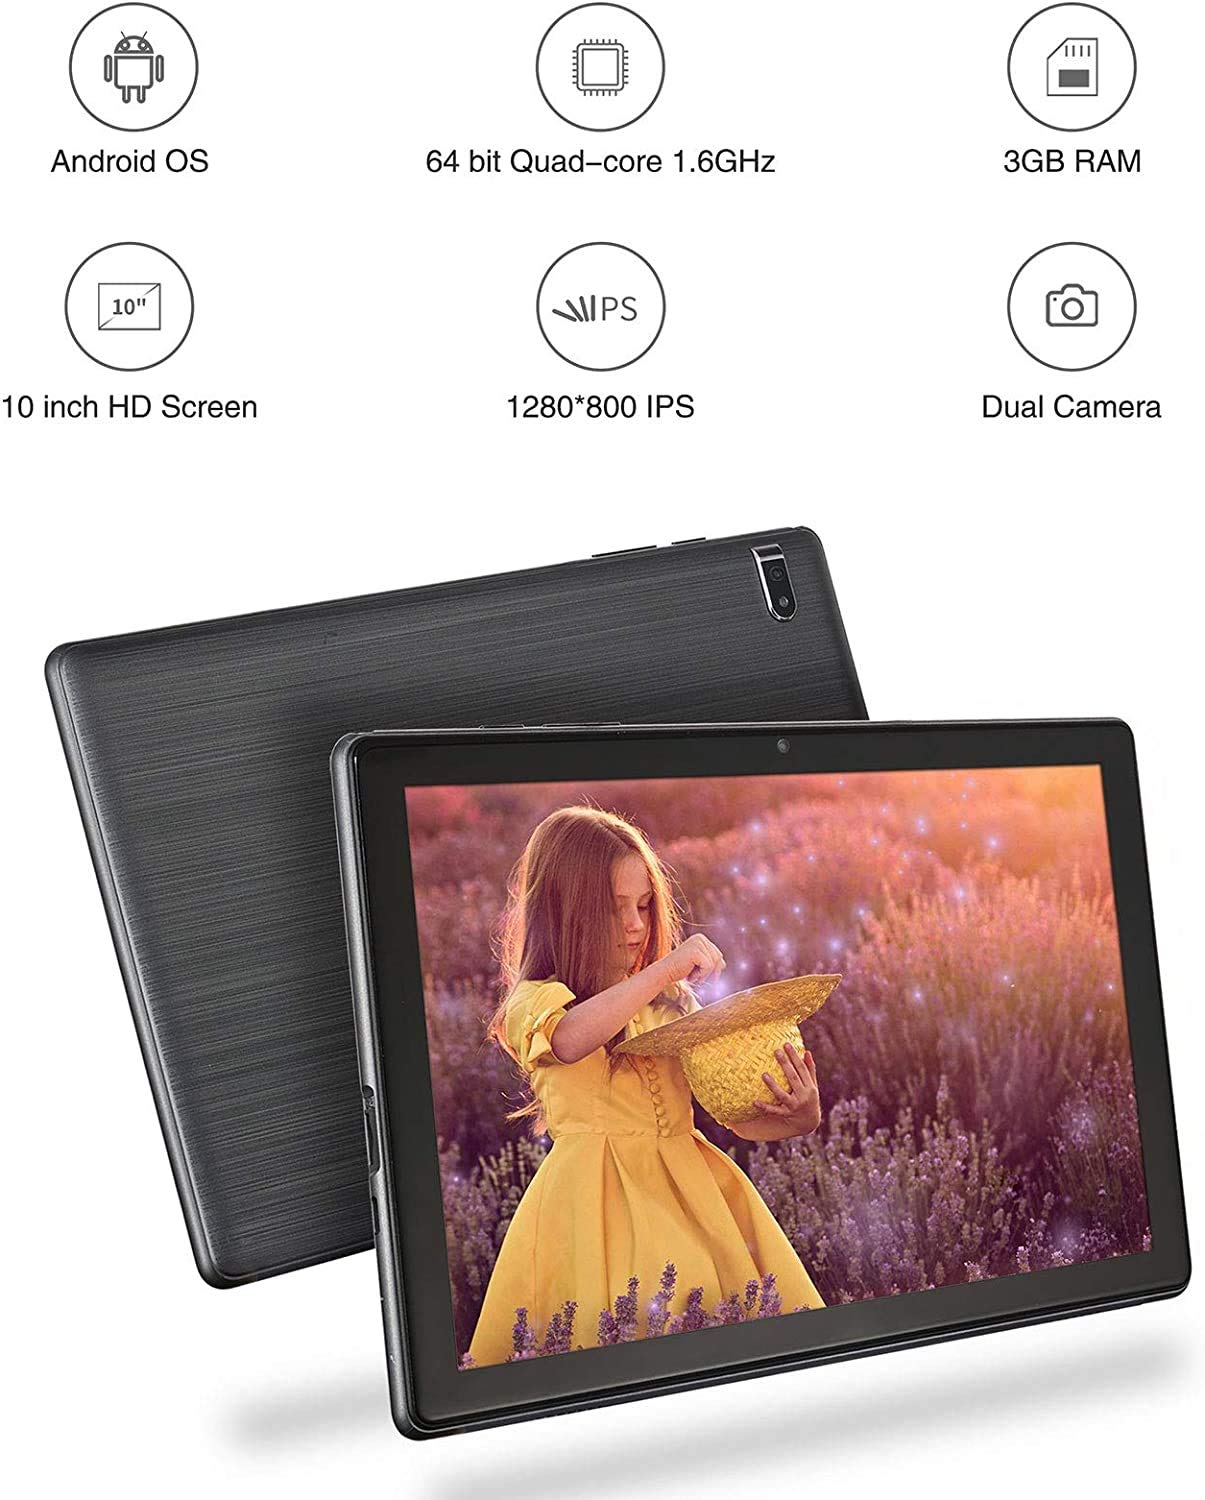 HAOVM Android 11.0 Tablet 10 Inch, MediaPad P10 Octa-Core 1.6GHz Processor,3GB RAM,64GB Storage,10.1